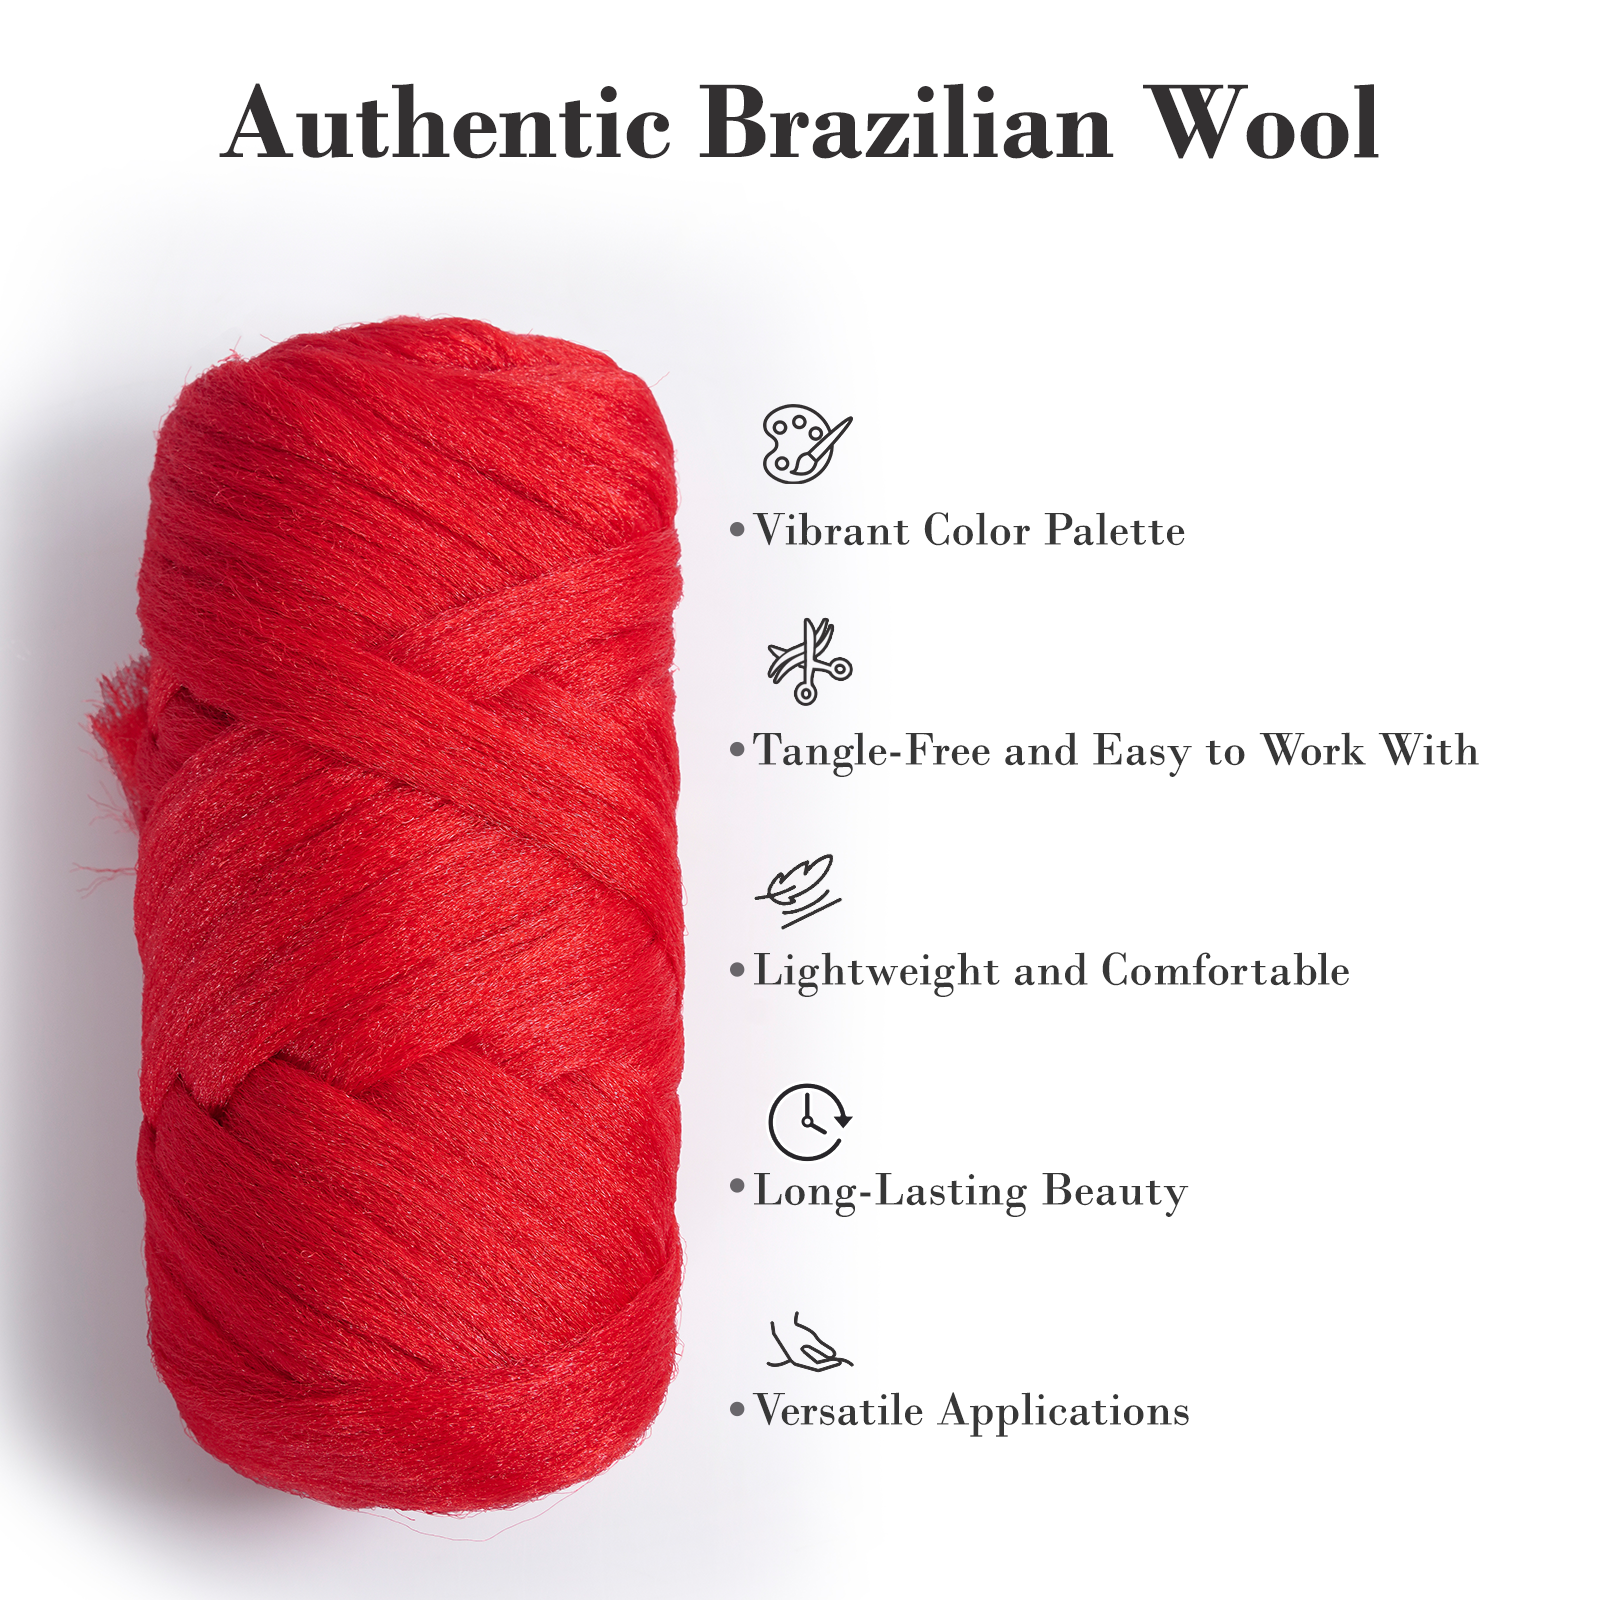 Toyotress 4 Roll Natural Black Brazilian Wool Hair Acrylic Yarn for African Crochet Hair Jumbo Braids Senegalese Twisting Knitting Hair Braids Faux locs Spiral Corkscrews Braids Twist